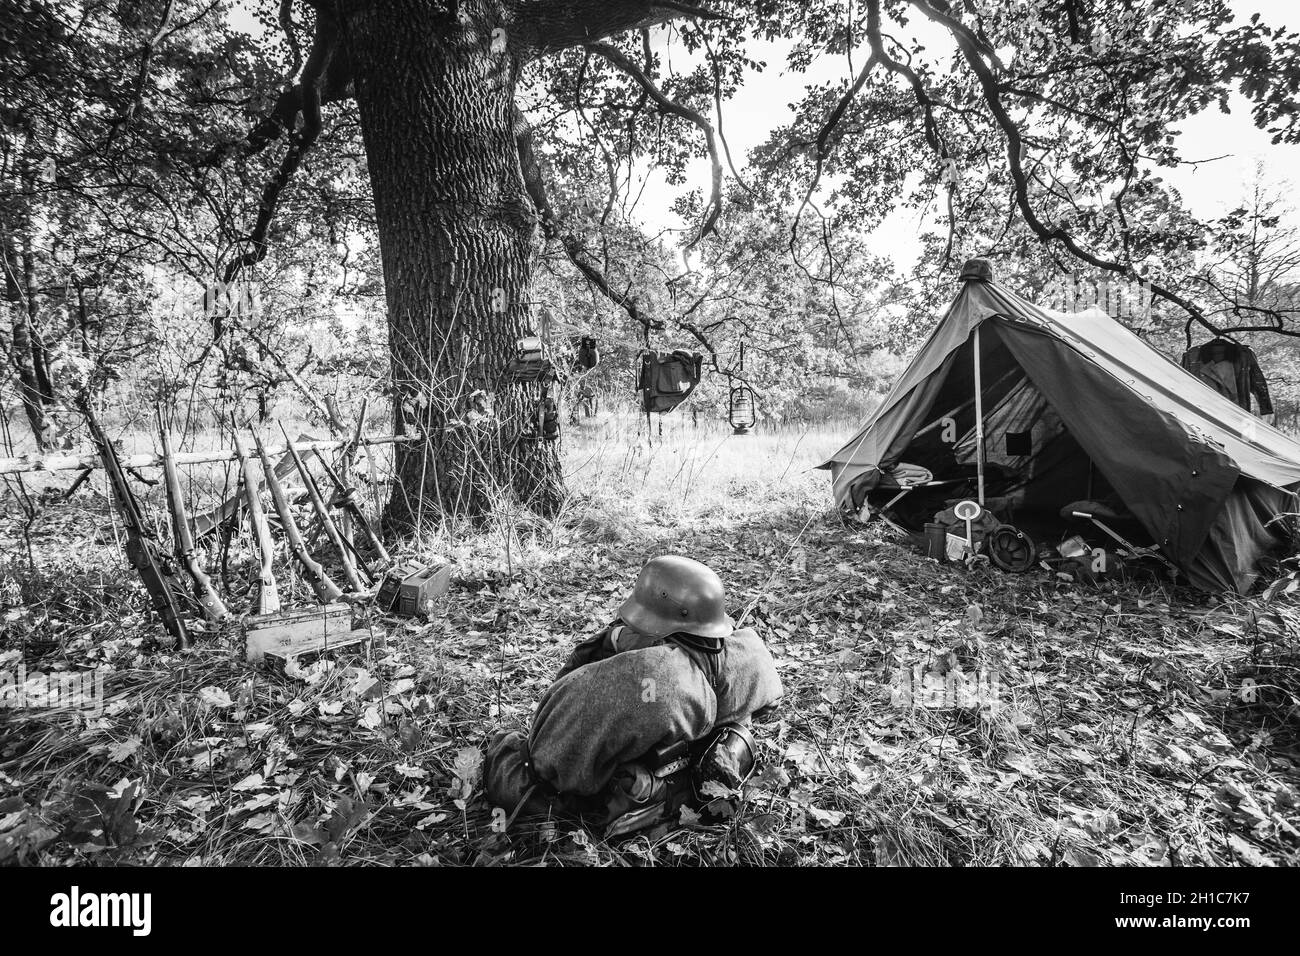 World War II German Wehrmacht Infantry Soldier Army Weapon Ammunition. Helmet, Rifles, Tent In Forest Camp. WWII WW2 German Ammunition. Photo In Black Stock Photo